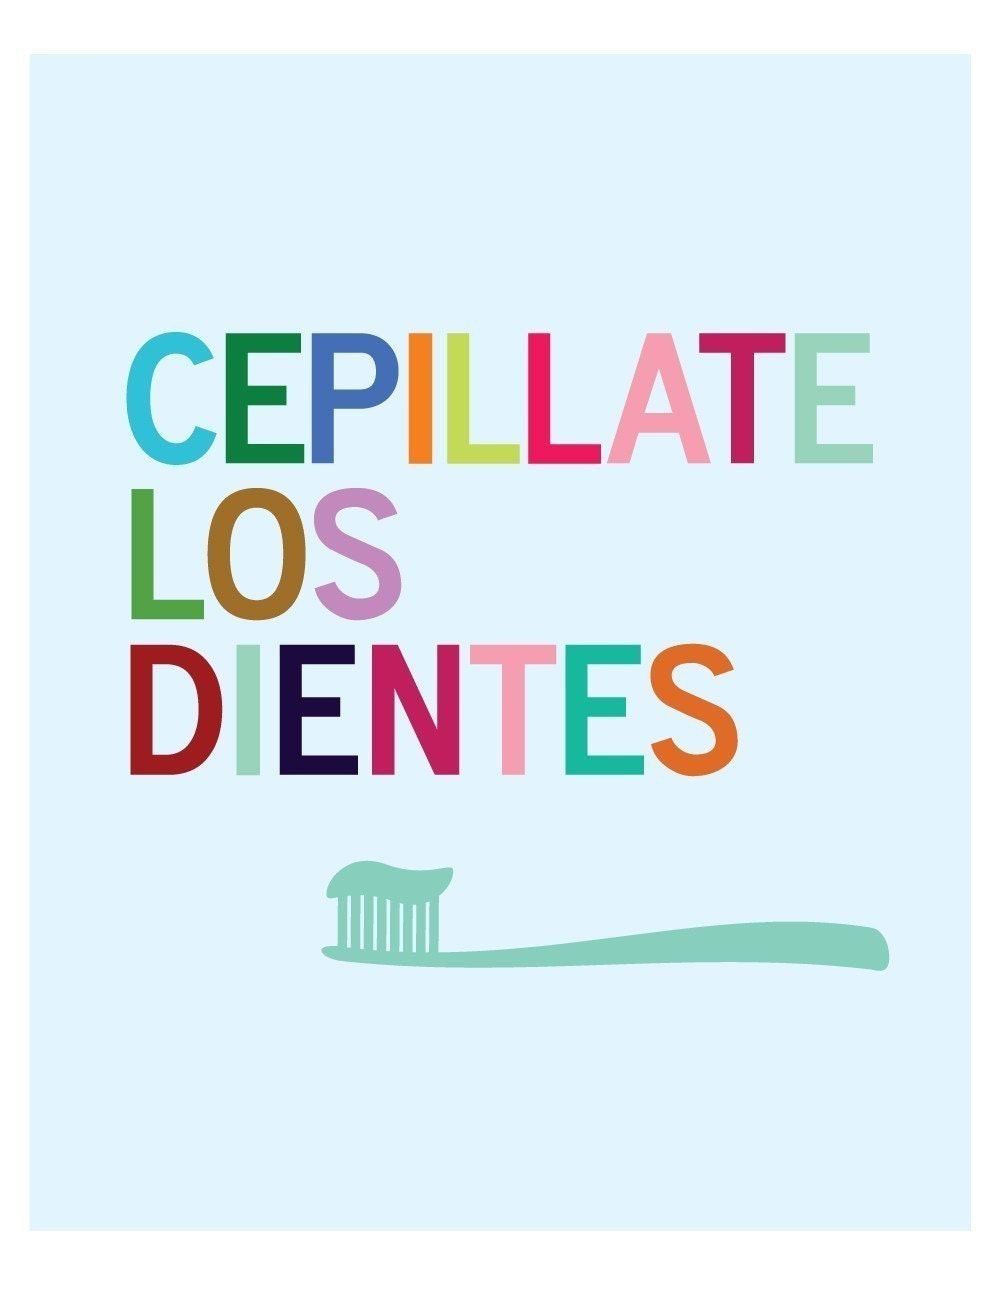 Cepillate Los Dientes - 8 x 10 bathroom wall art print - Spanish